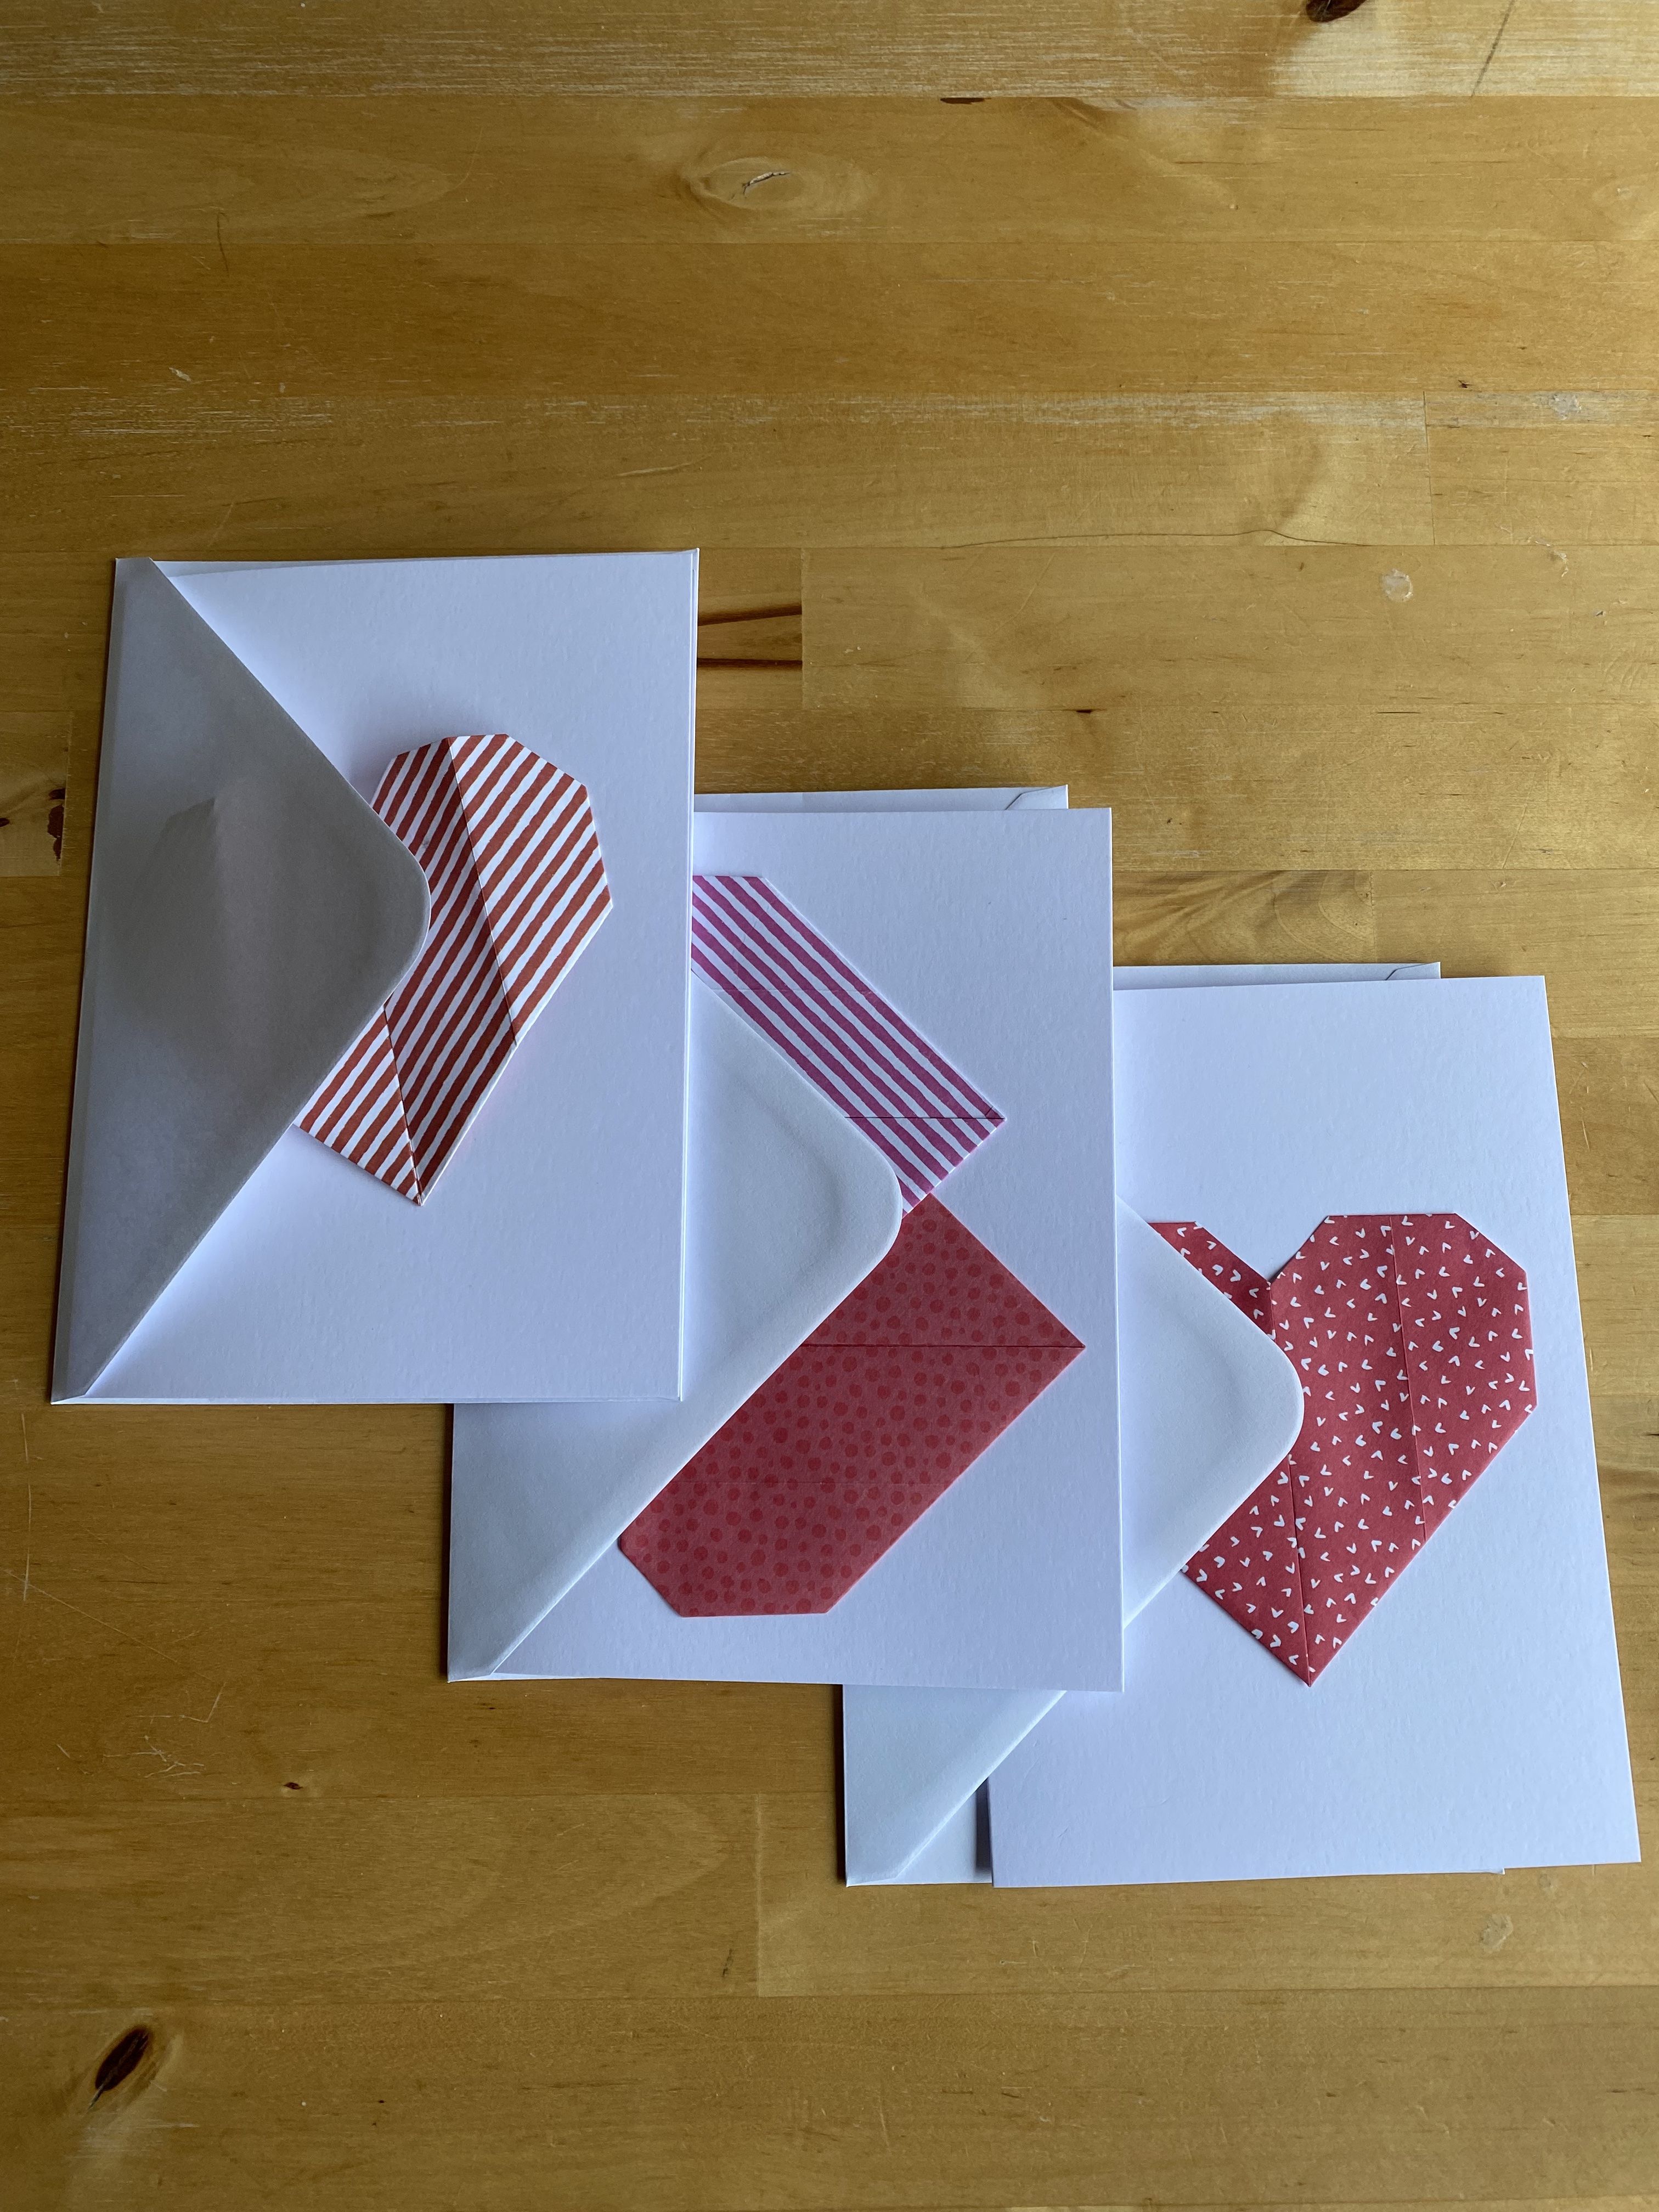 Handmade Origami Valentine Cards - Heart Cards - Greeting Cards - Valentine Cards - Assortment of Valentine Origami Cards